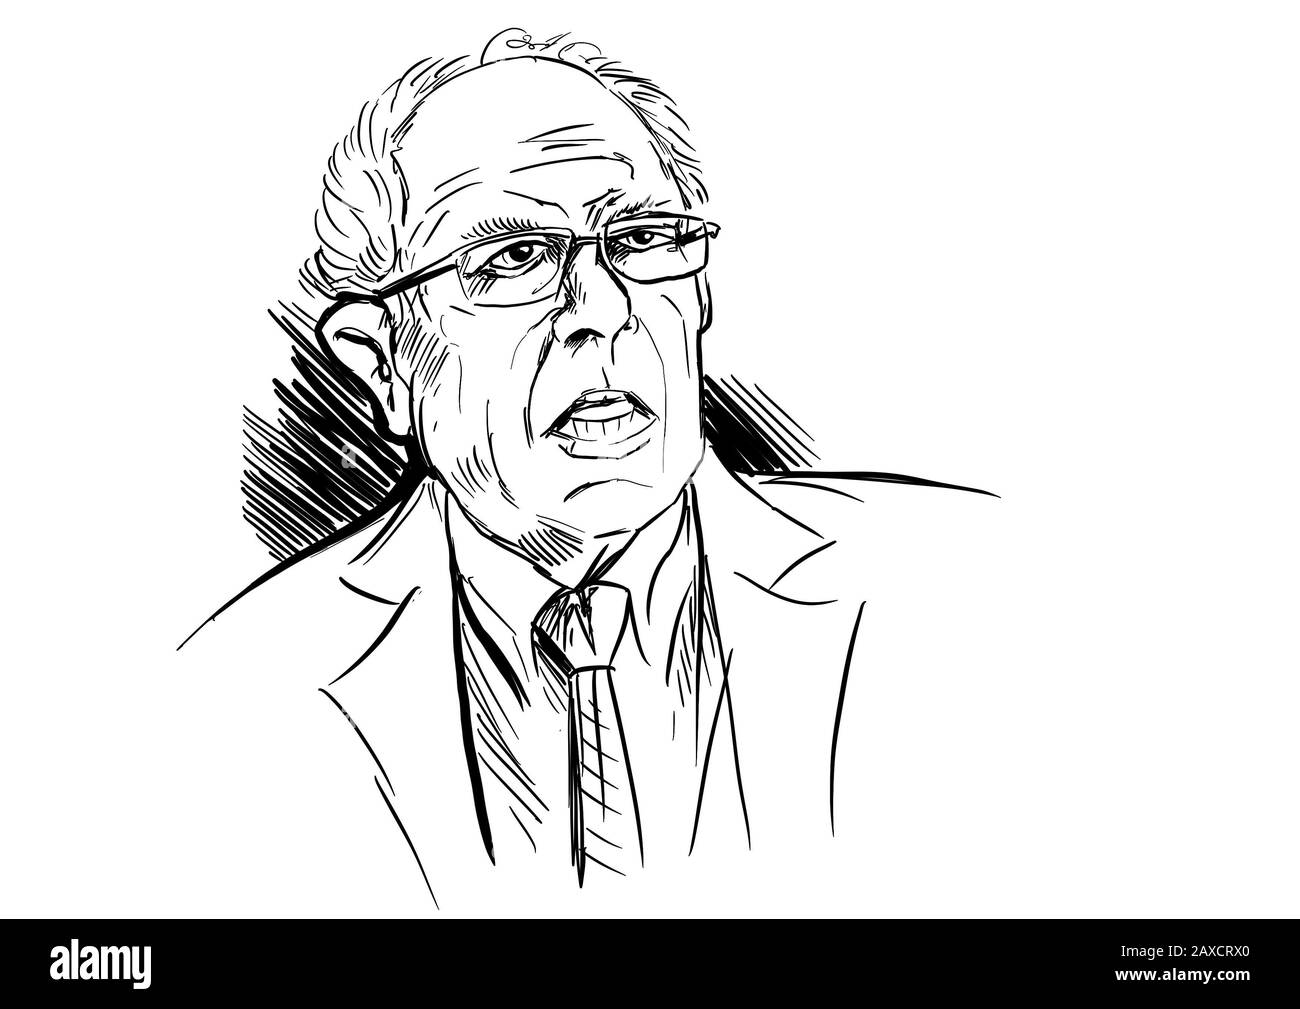 Bernie Sanders caricature illustration Stock Photo